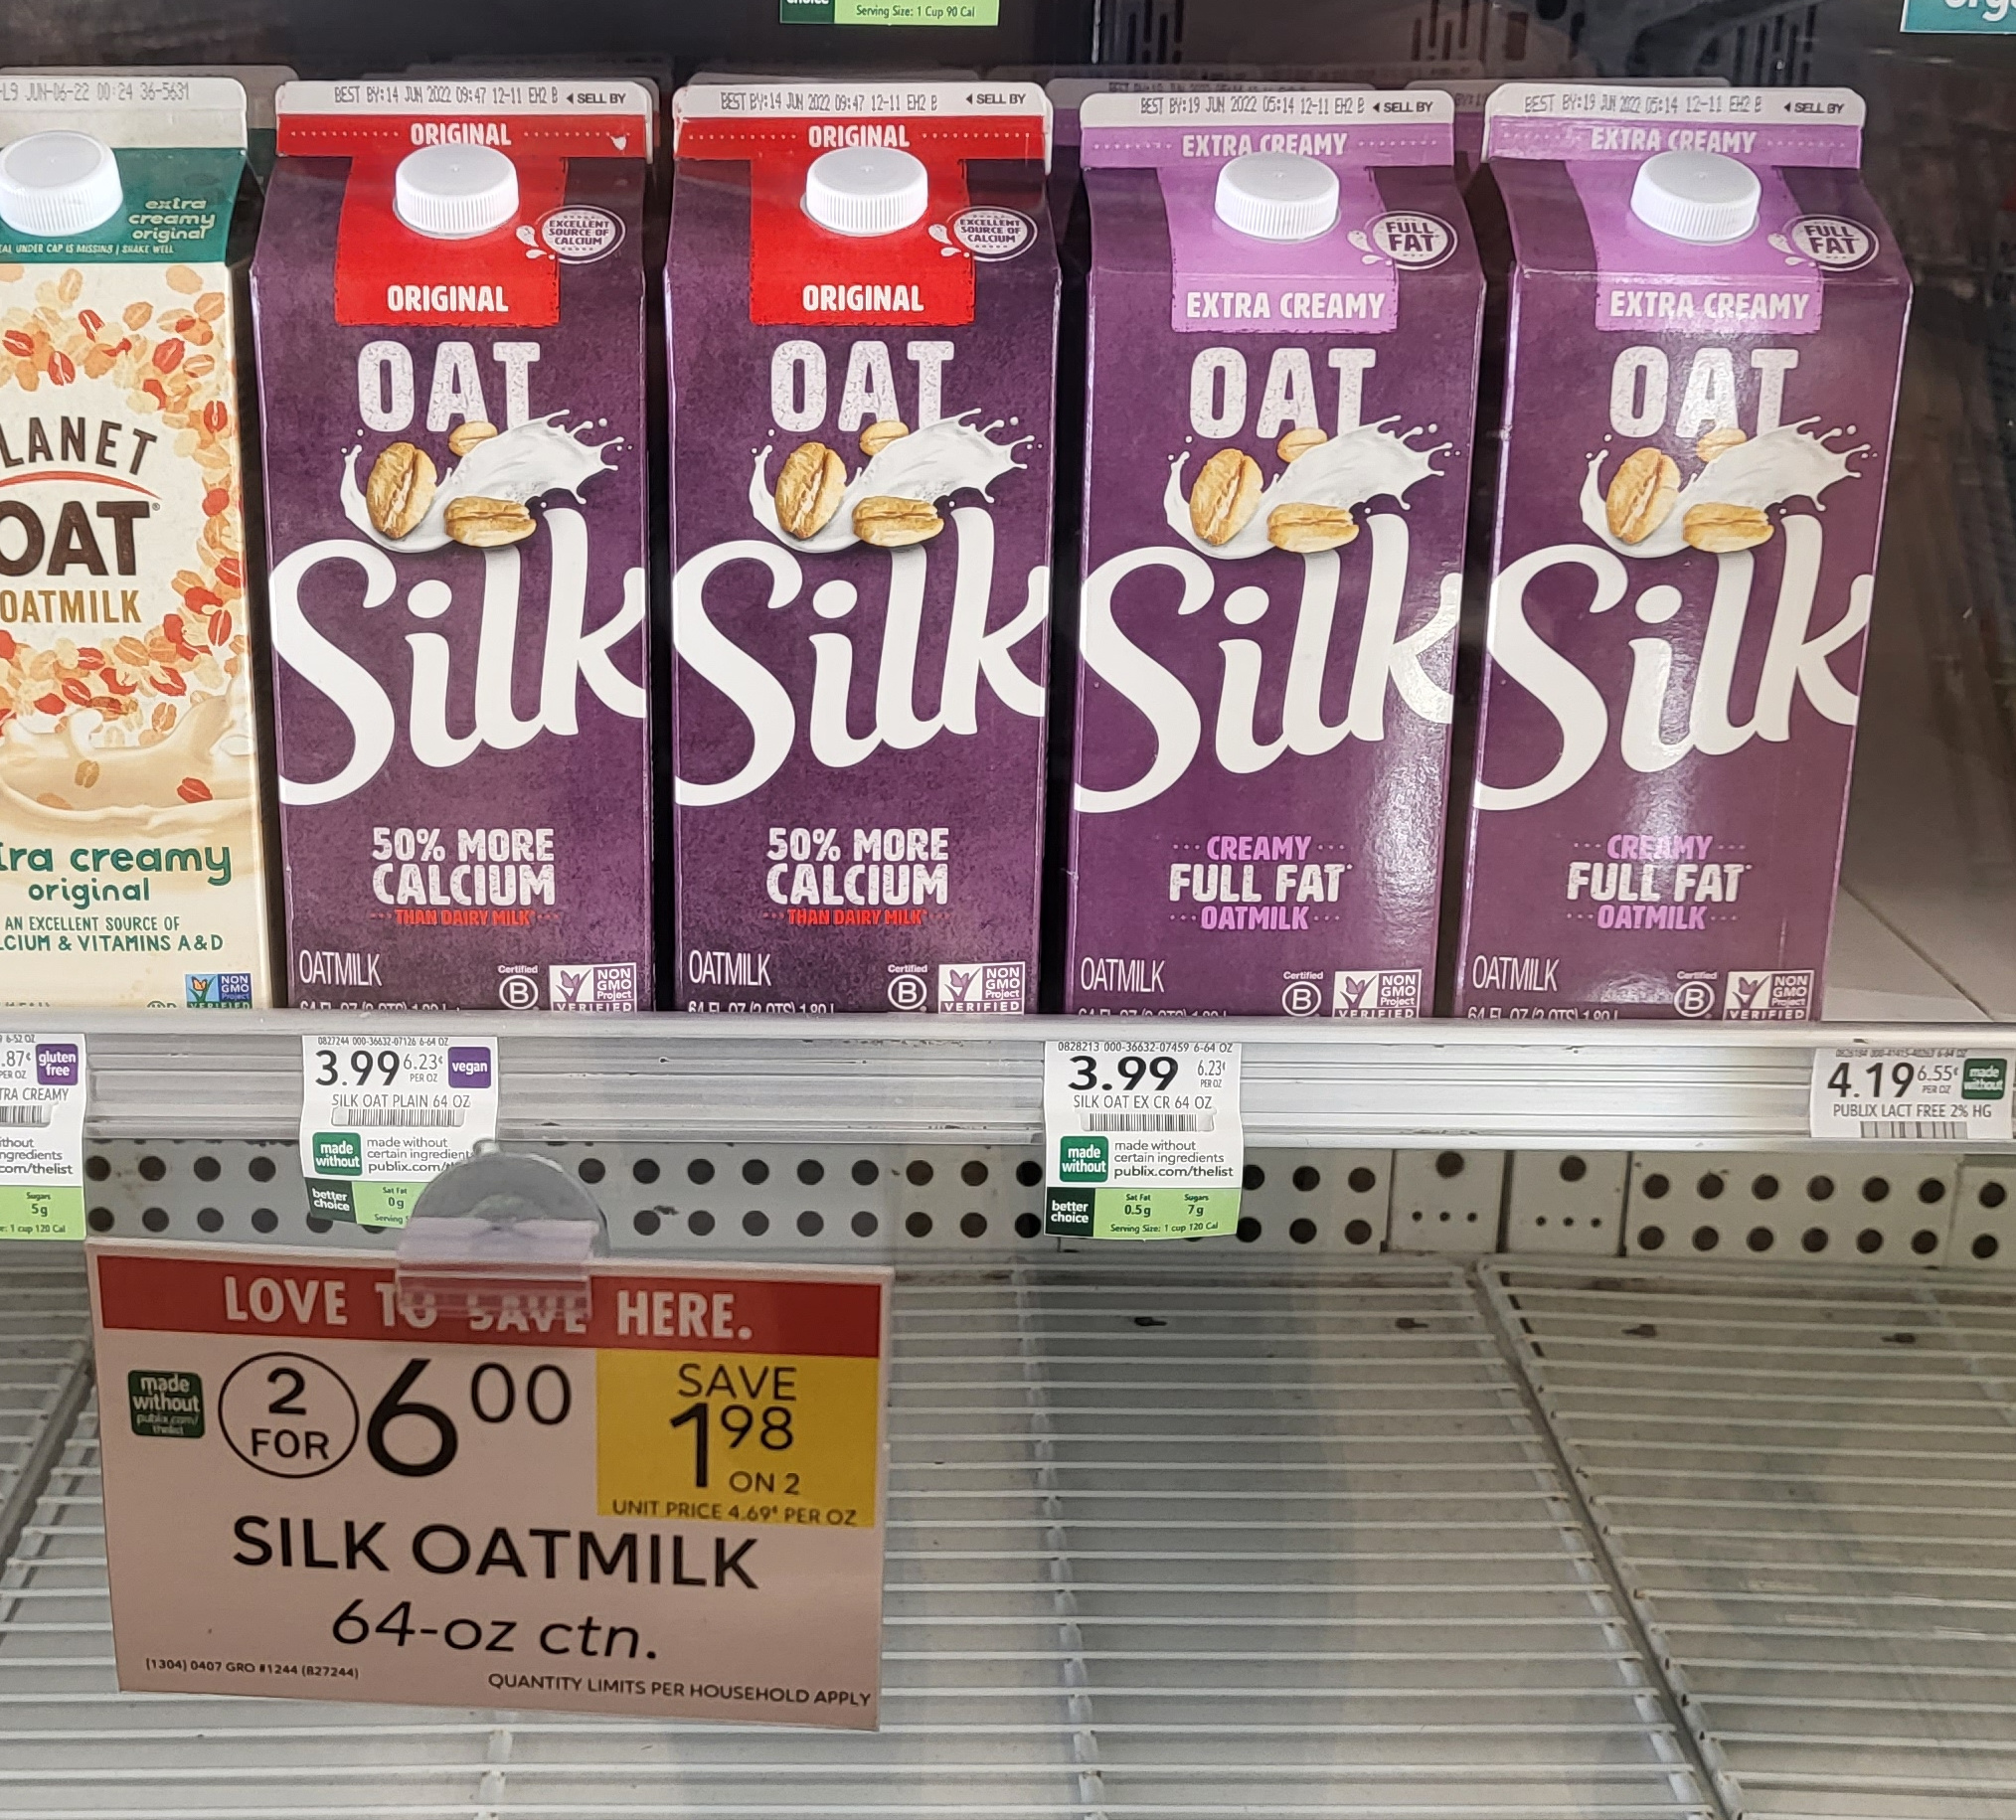 Score Delicious Silk Oatmilk For Just $1.75 At Publix on I Heart Publix